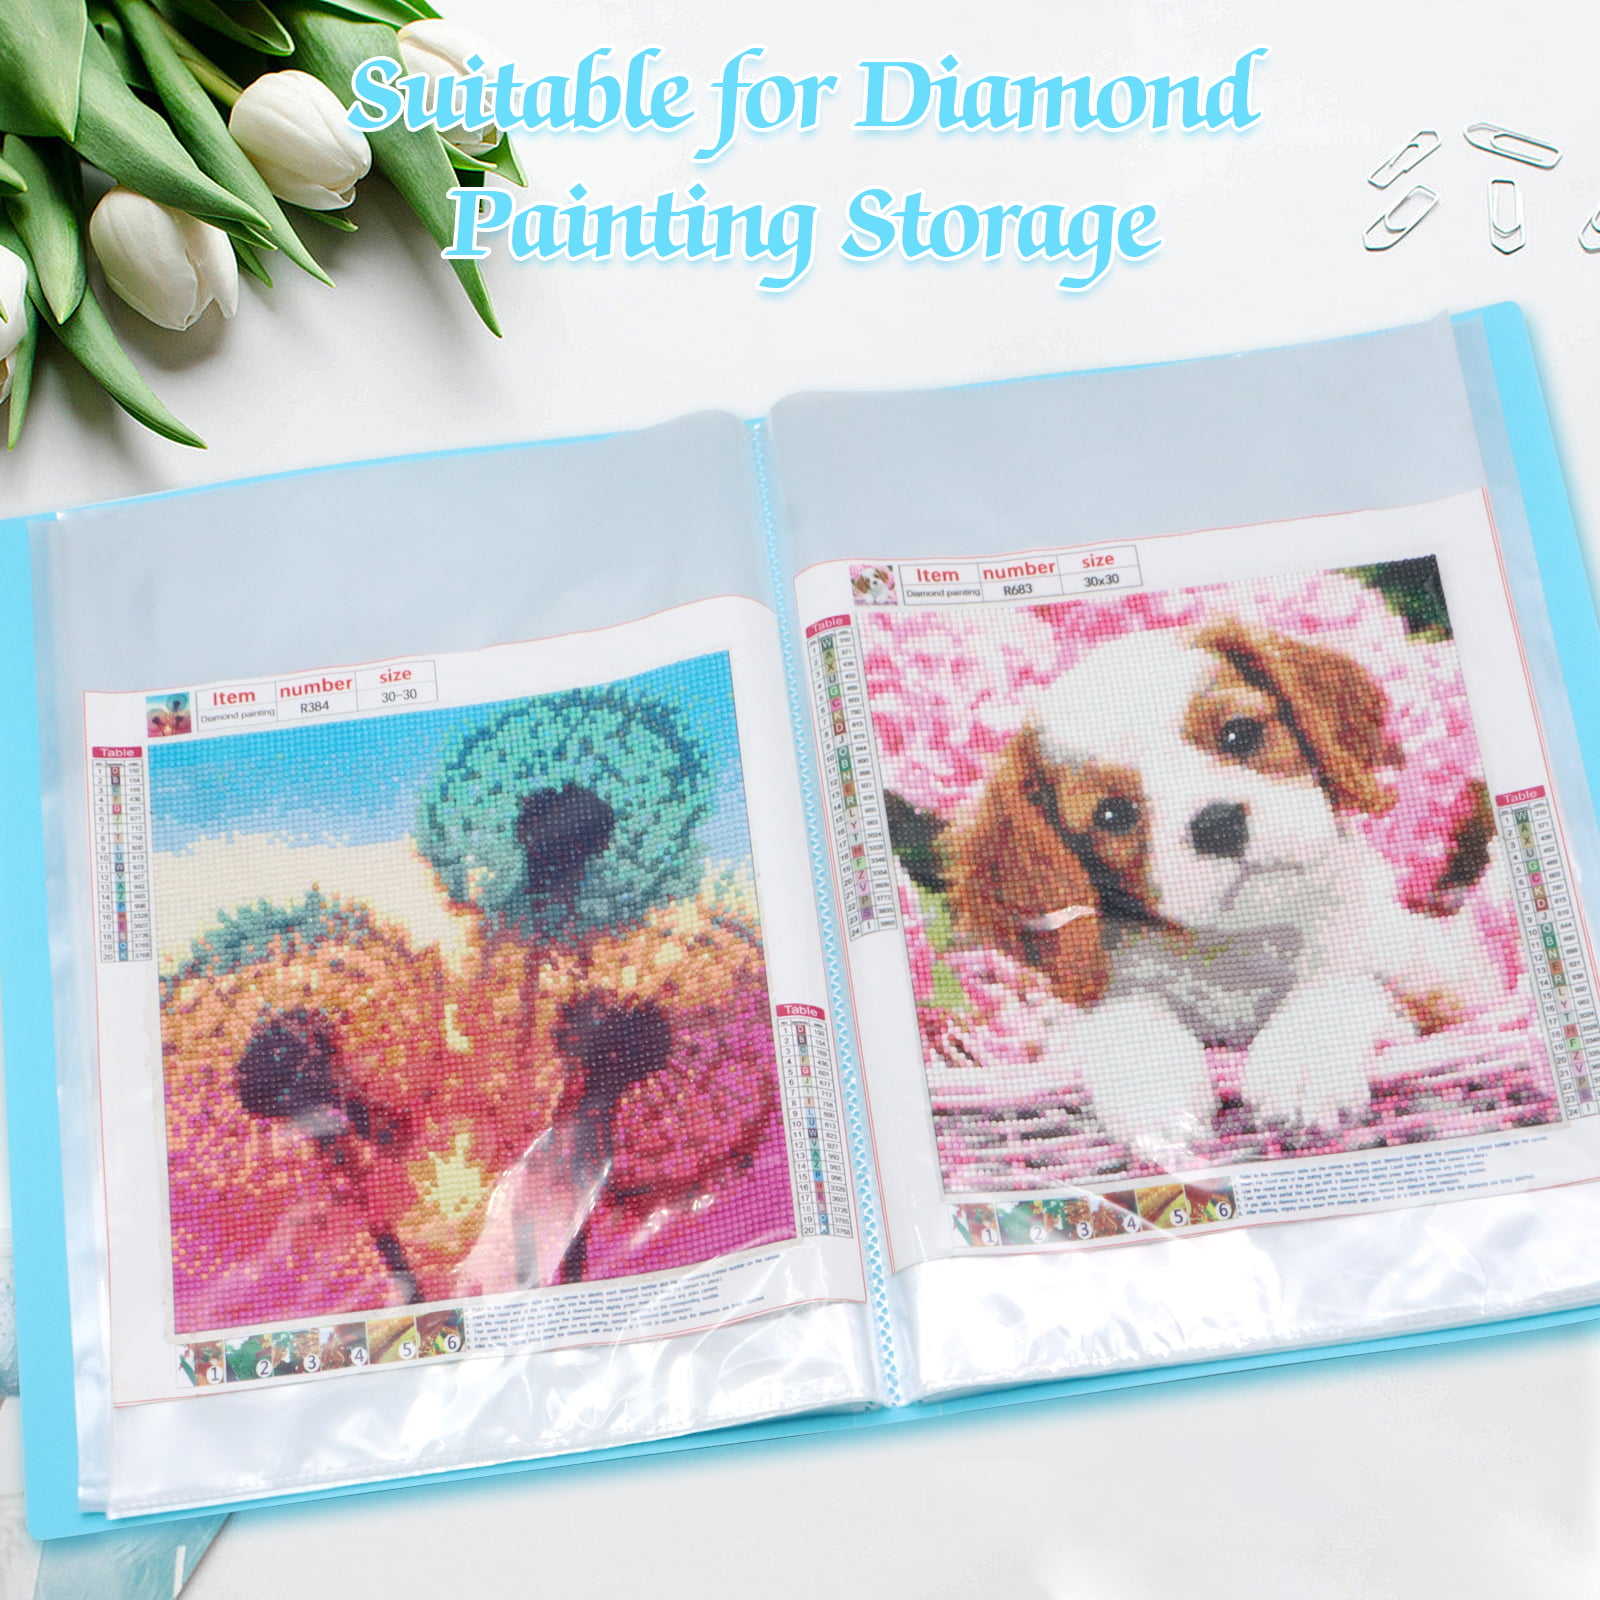 Rertcioph A3 60 Pockets Diamond Painting Storage Book, Portfolio Folder for  12x16 inch (30X40cm) Diamond Art Kits with handle, Hold Up to 120 Diamond